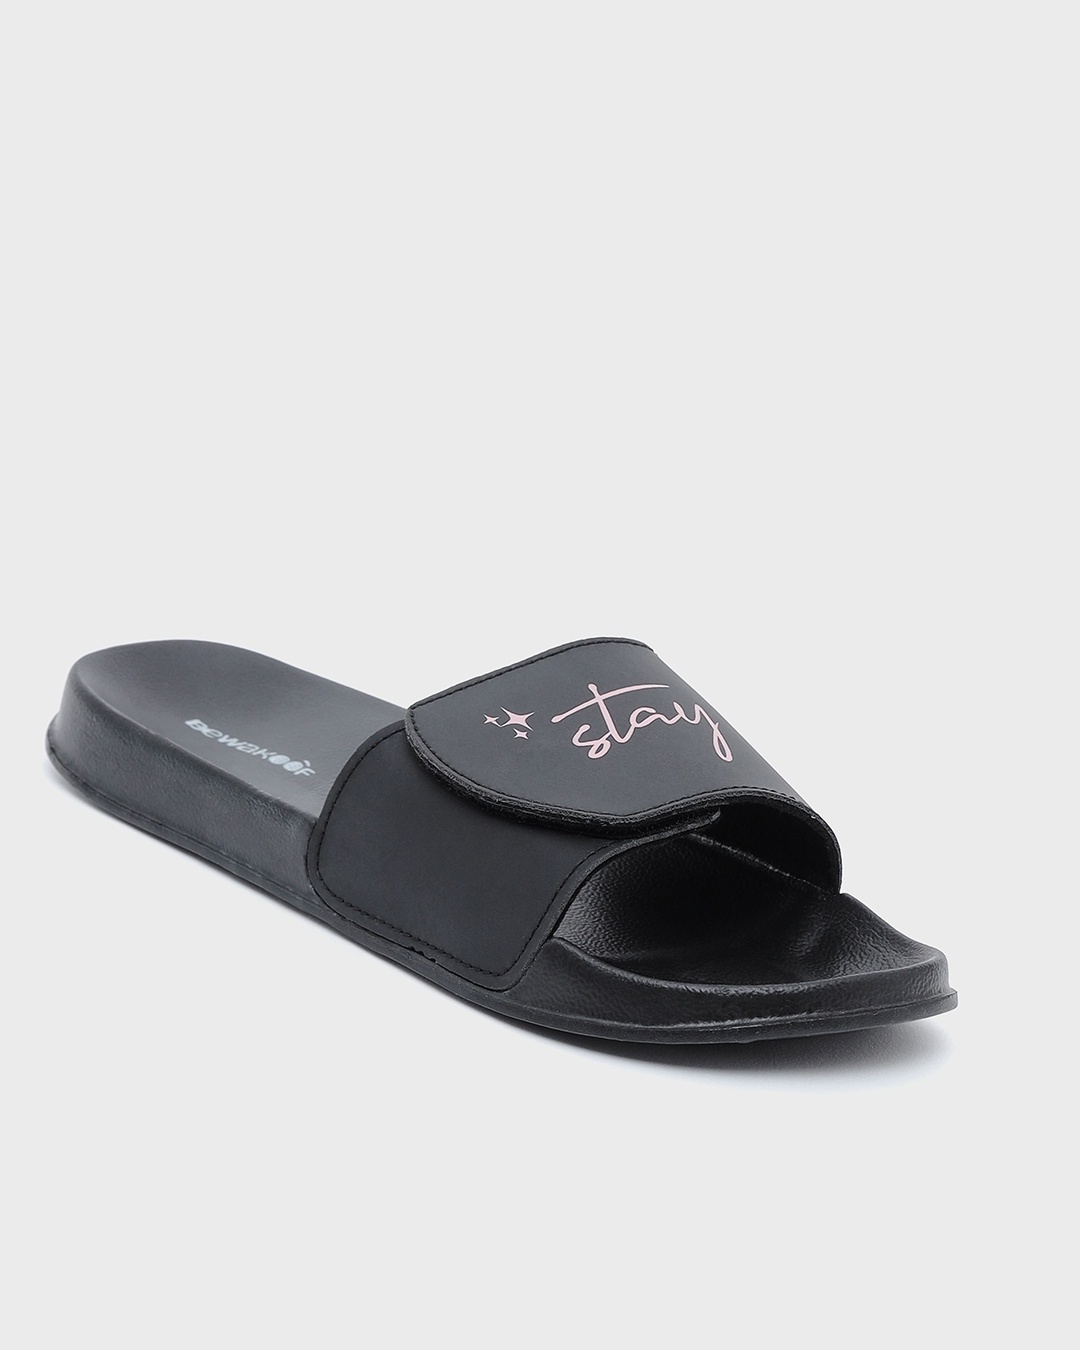 Shop Women's Black Stay Classy Typography Adjustable Velcro Slider-Full